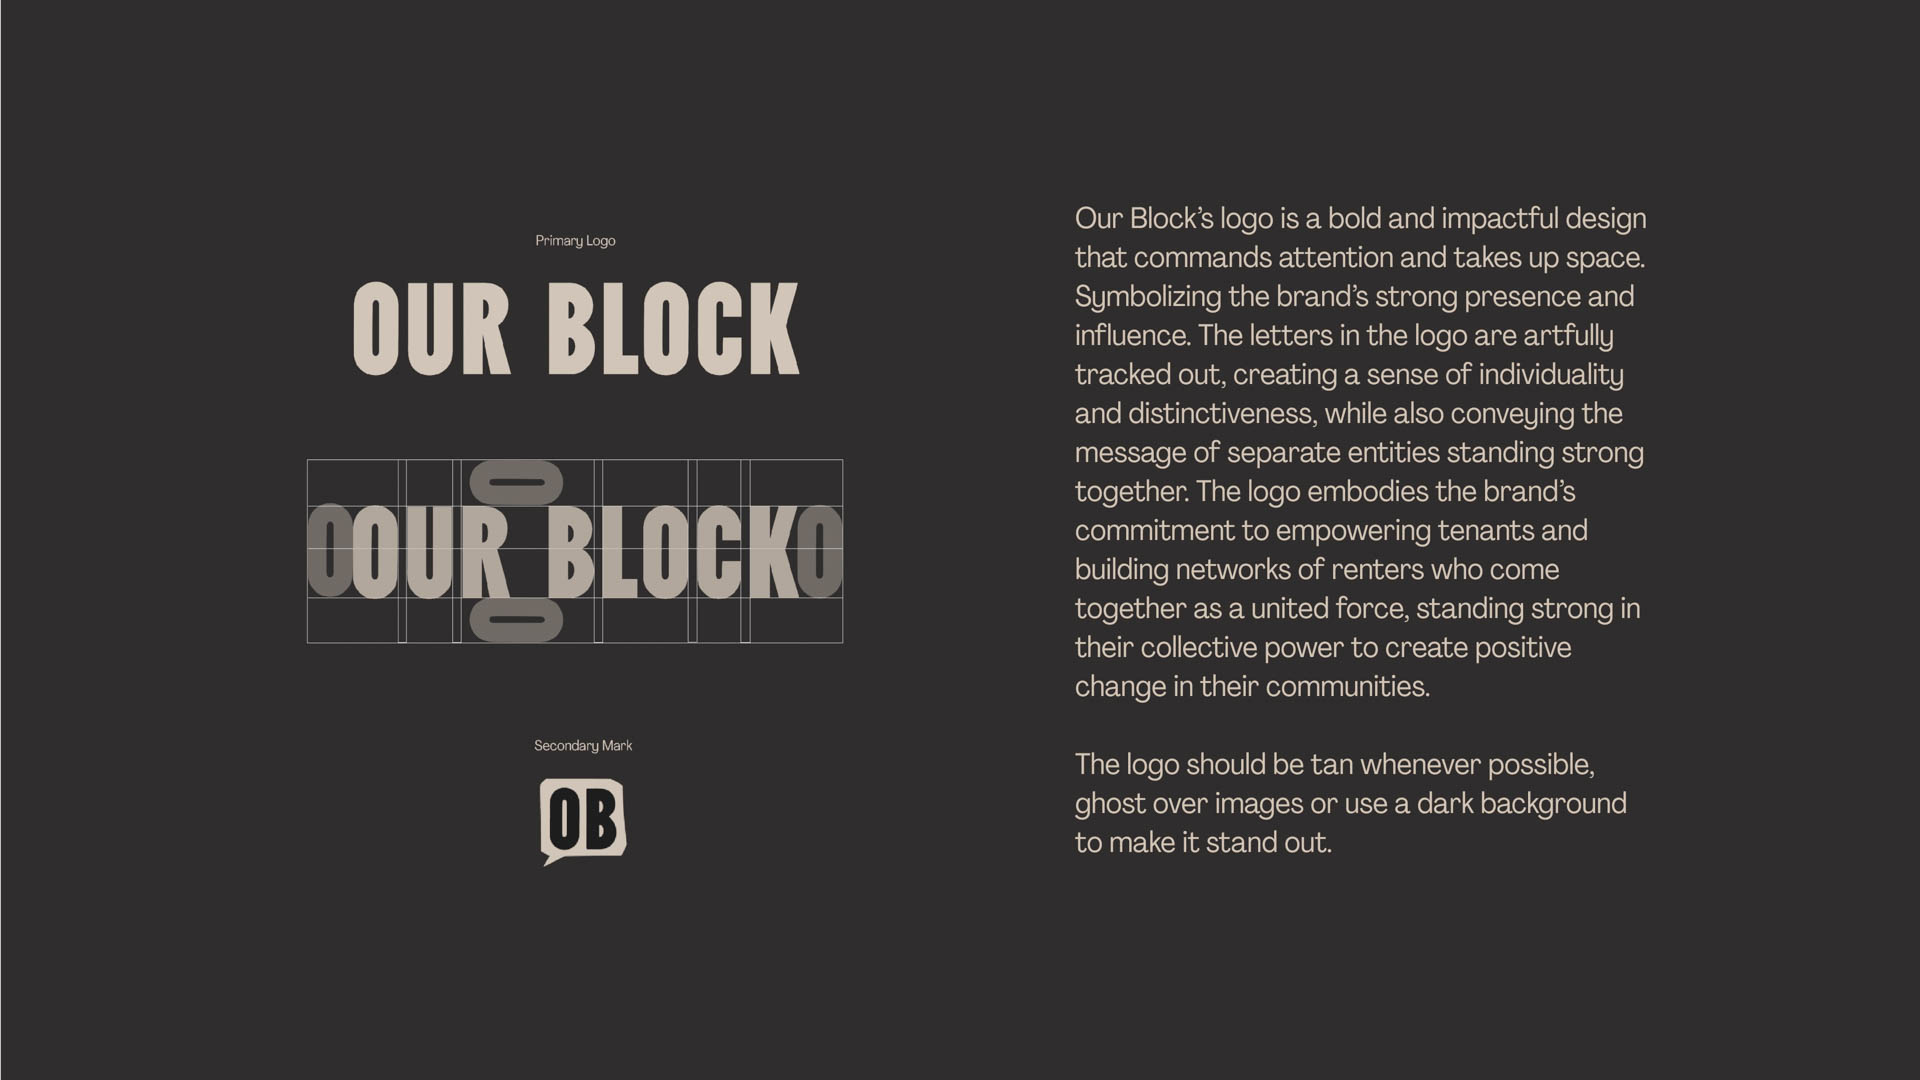 Our Block app information, text against dark background